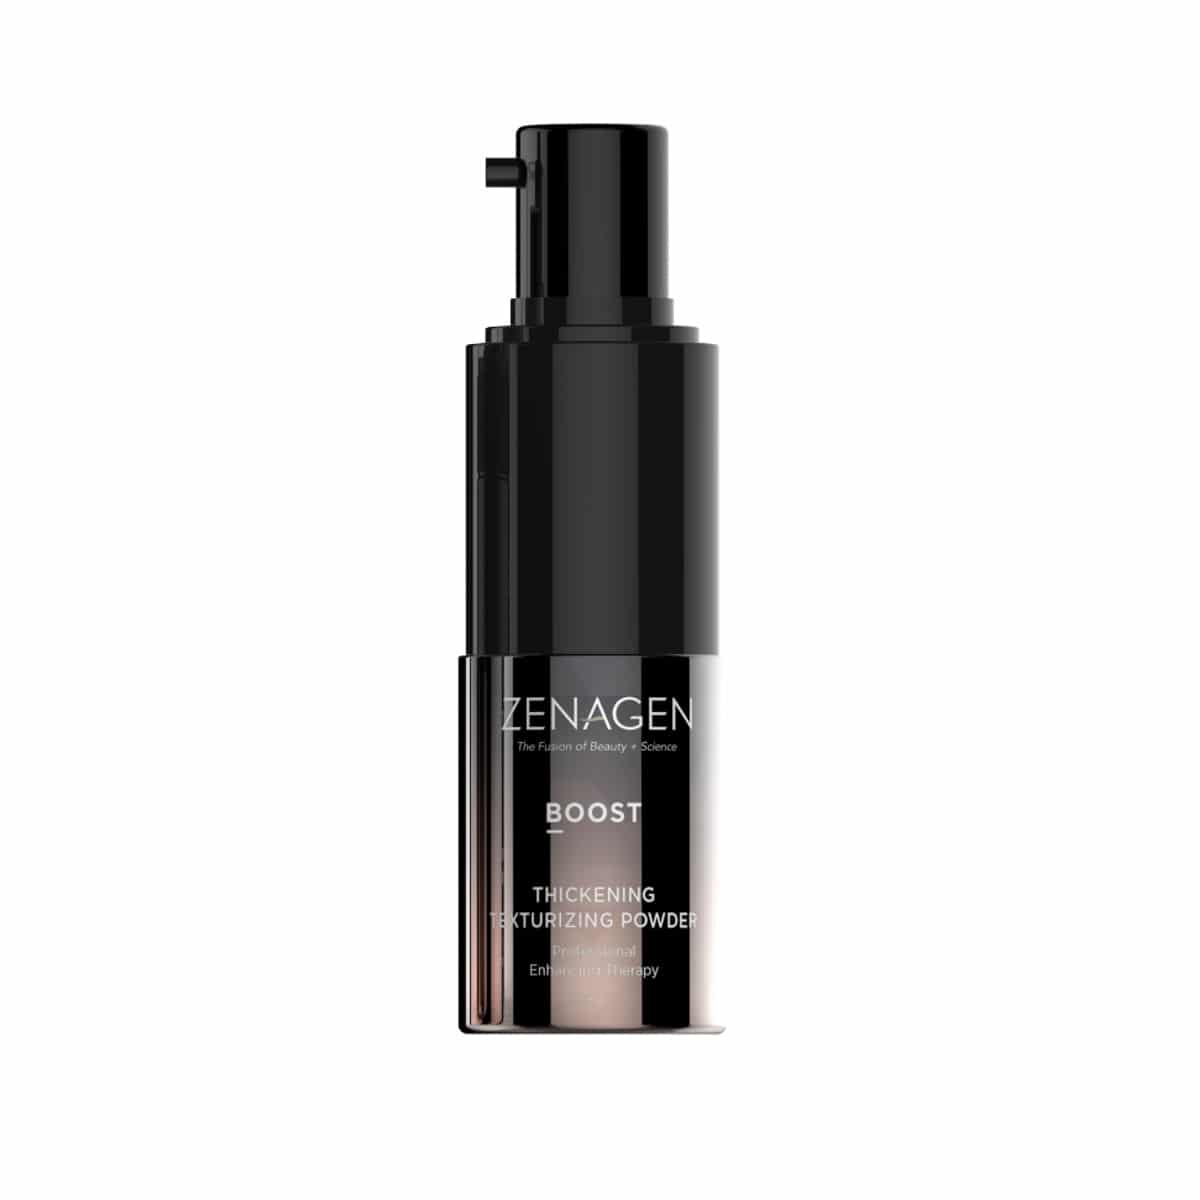 Zenagen Boost Thickening Texturizing Powder - The Beauty Lounge